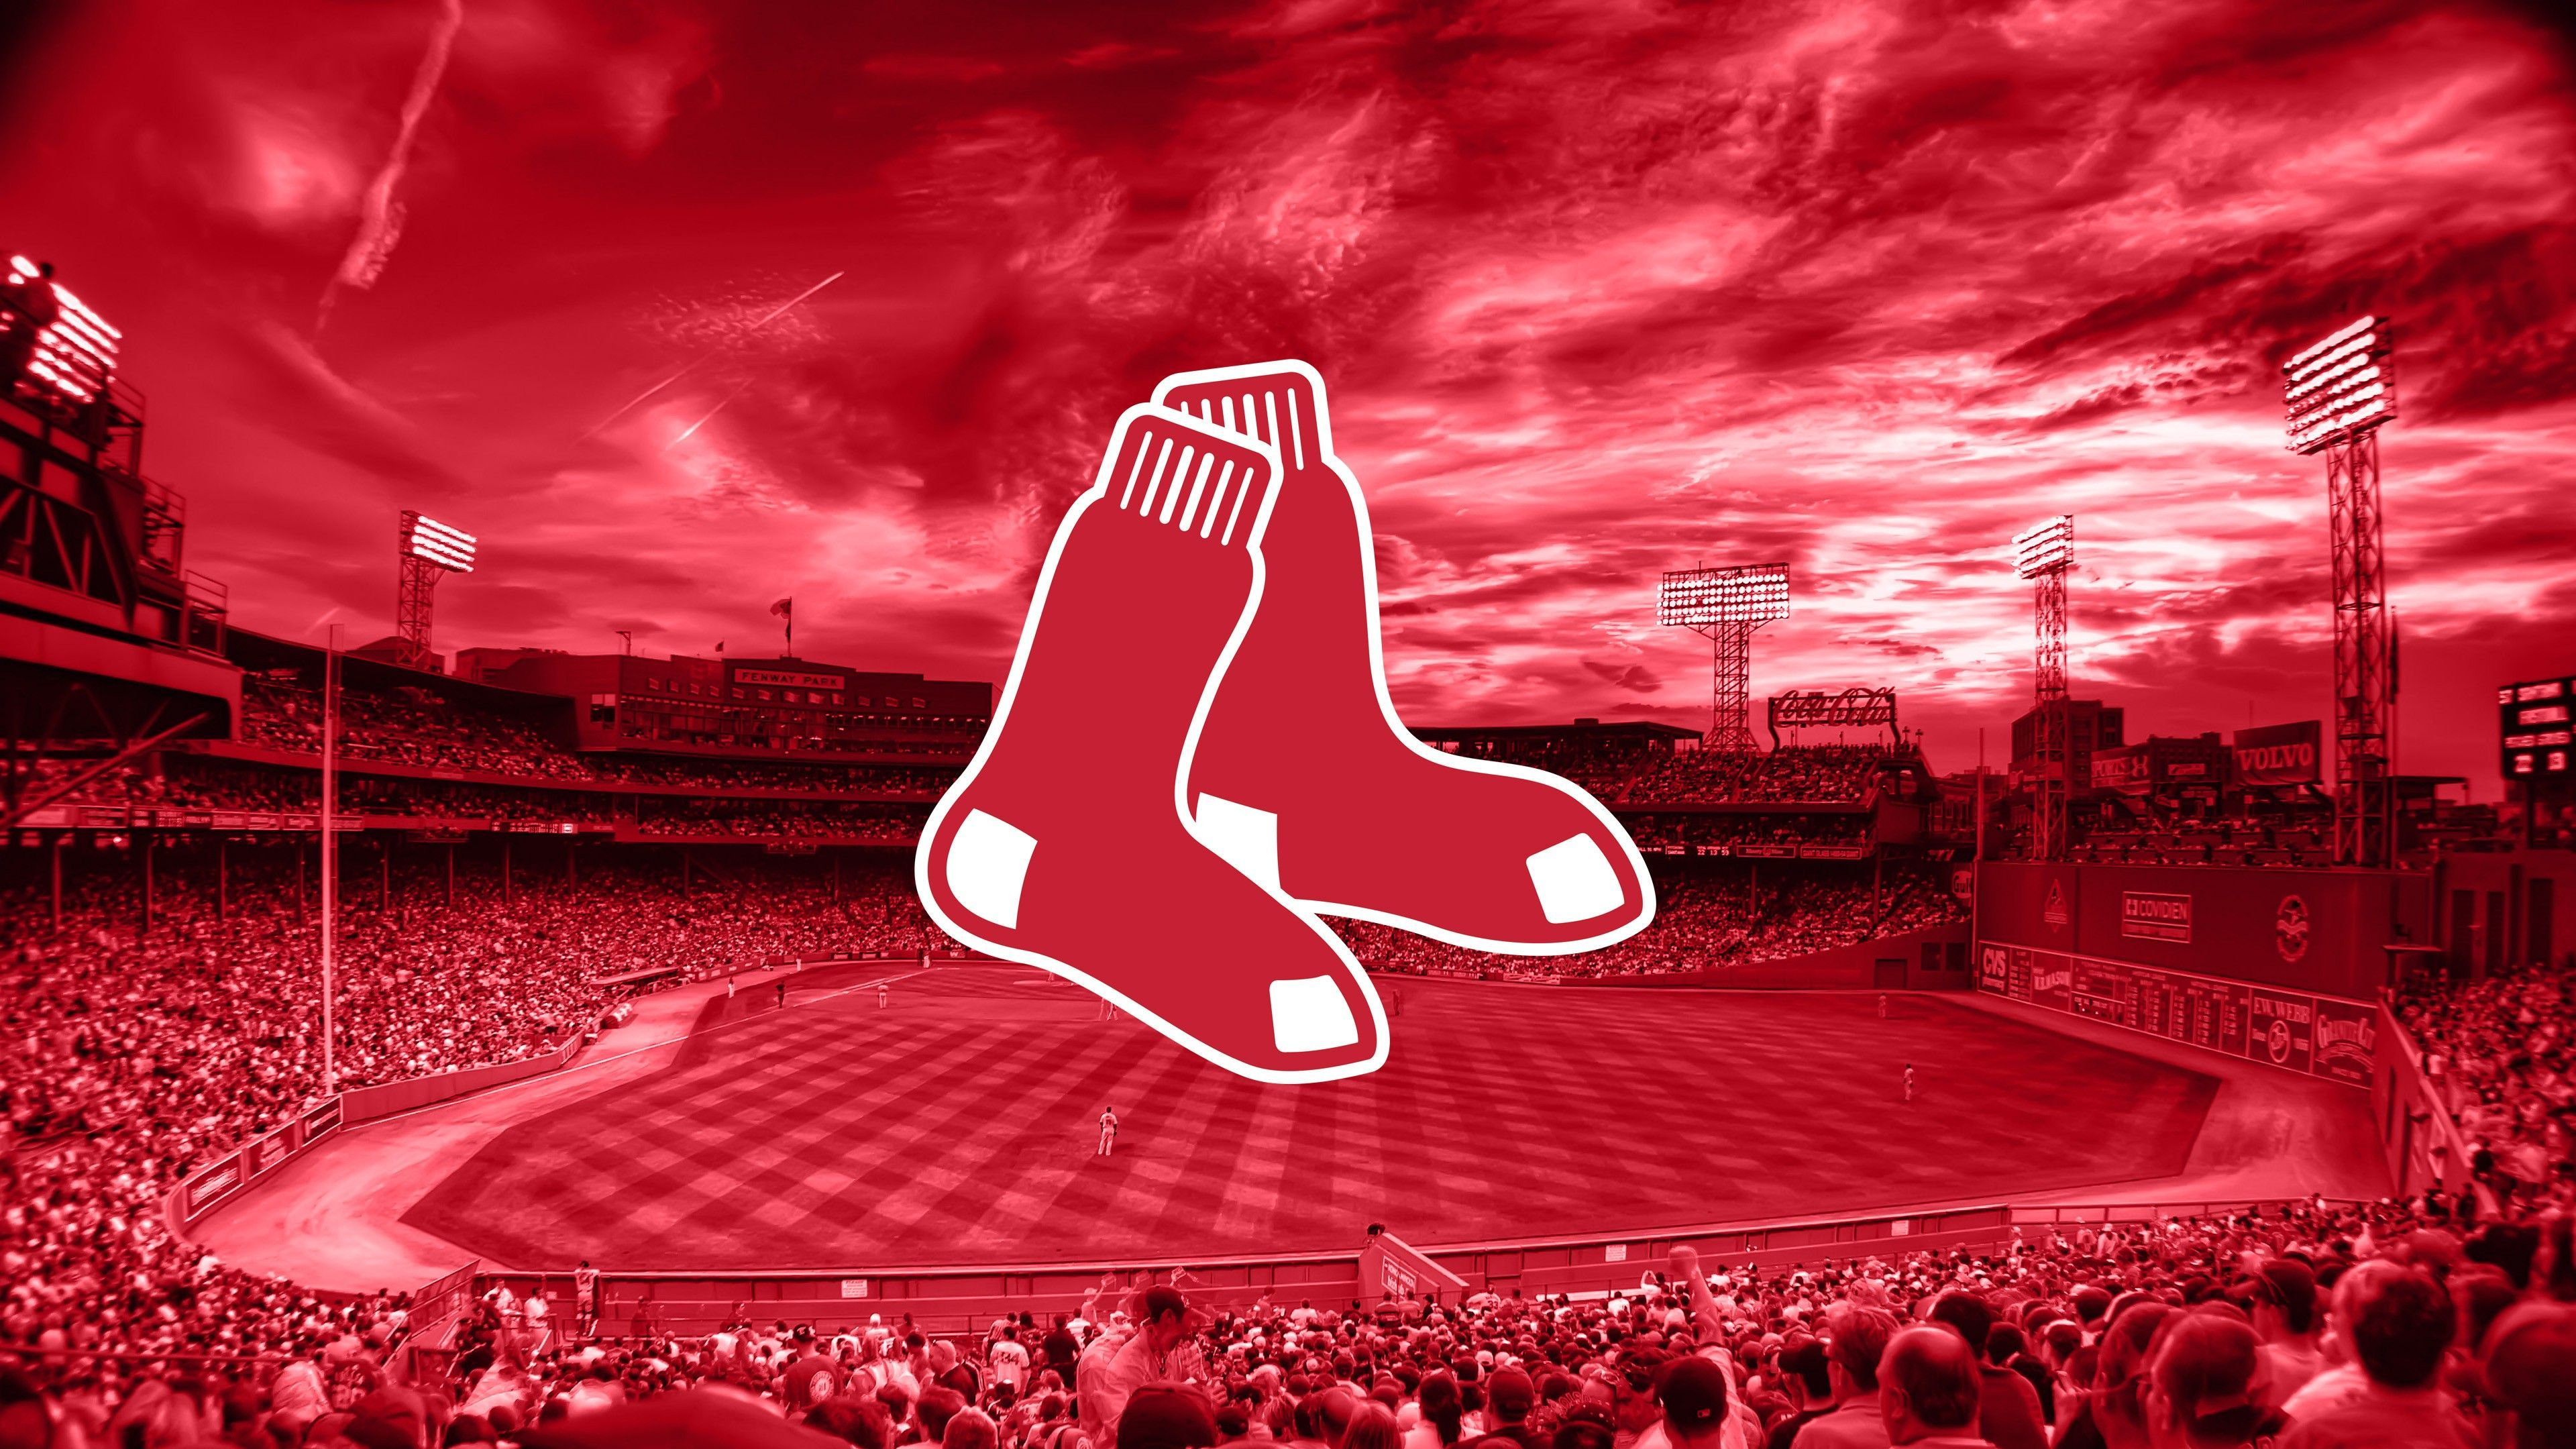 3840x2160 50+ Cool Red Sox Wallpapers Download at WallpaperBro | Red sox wallpaper, Boston red sox wallpaper, Red sox log